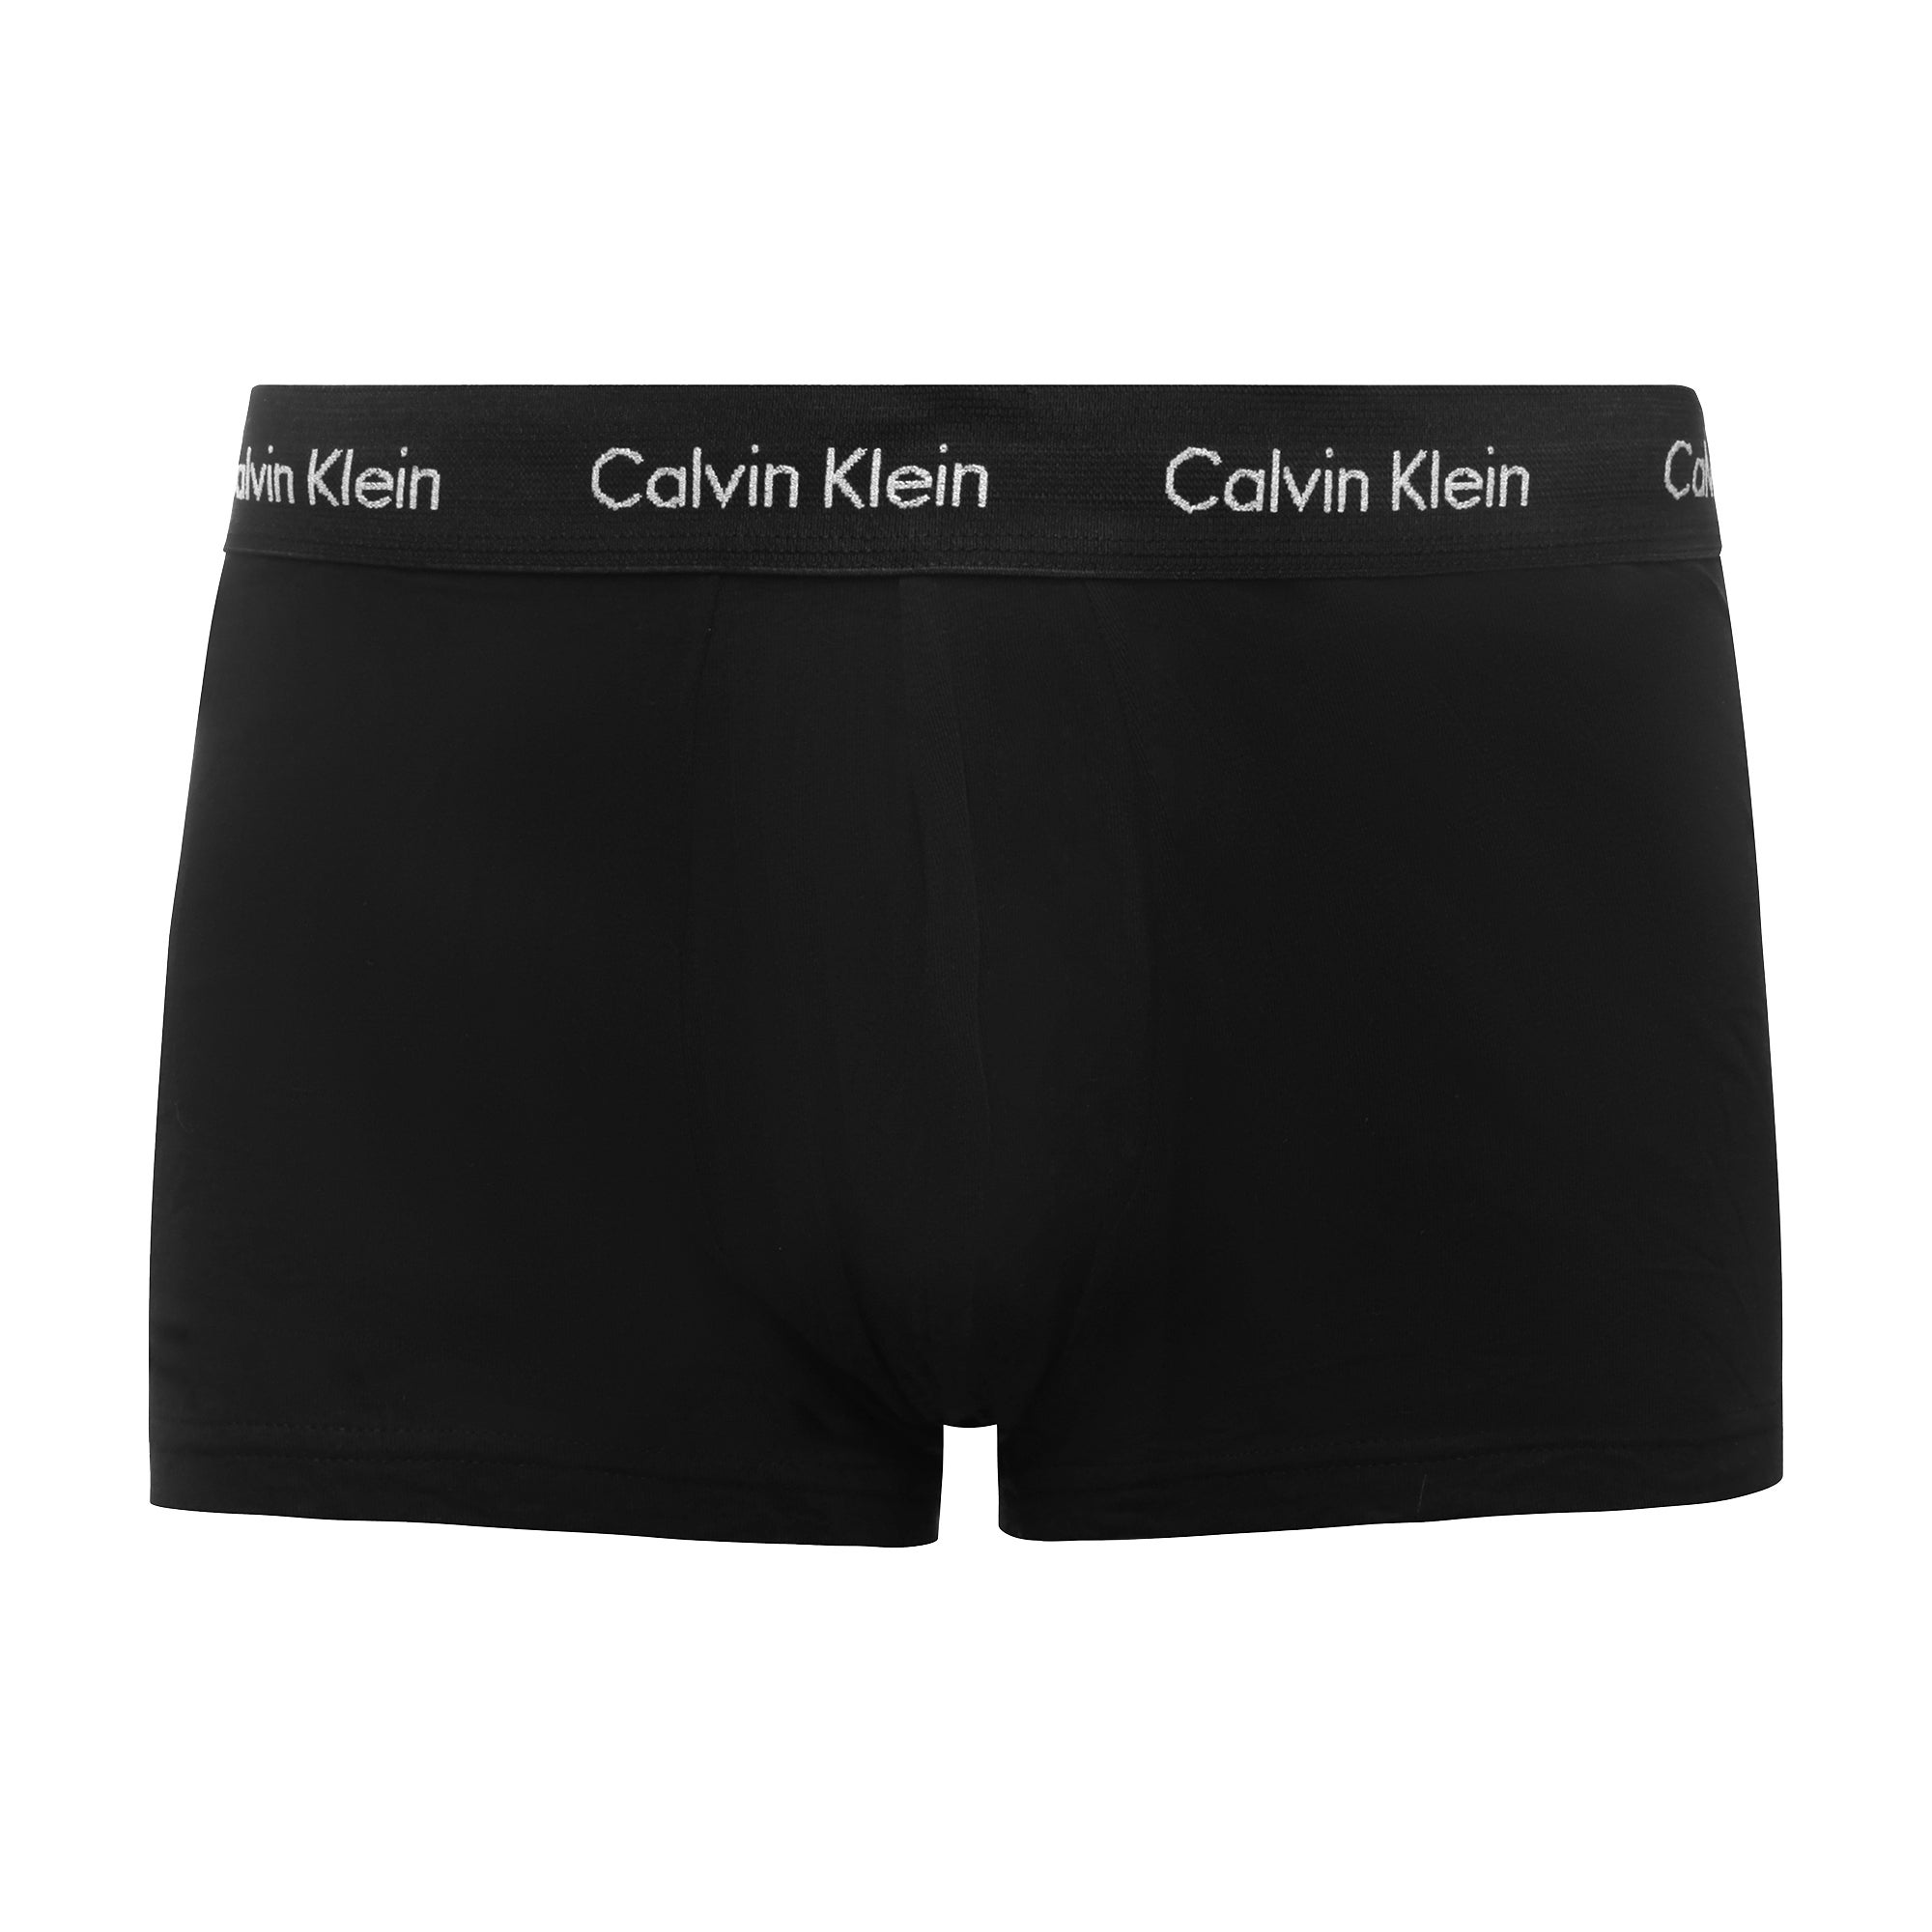 Buy Calvin Klein Men's Cotton Stretch Low Rise Trunk Pack Underwear Black  Stone/Red Carpet/Olive/Legion Blue/Exact (S, M, L, XL) MyDeal